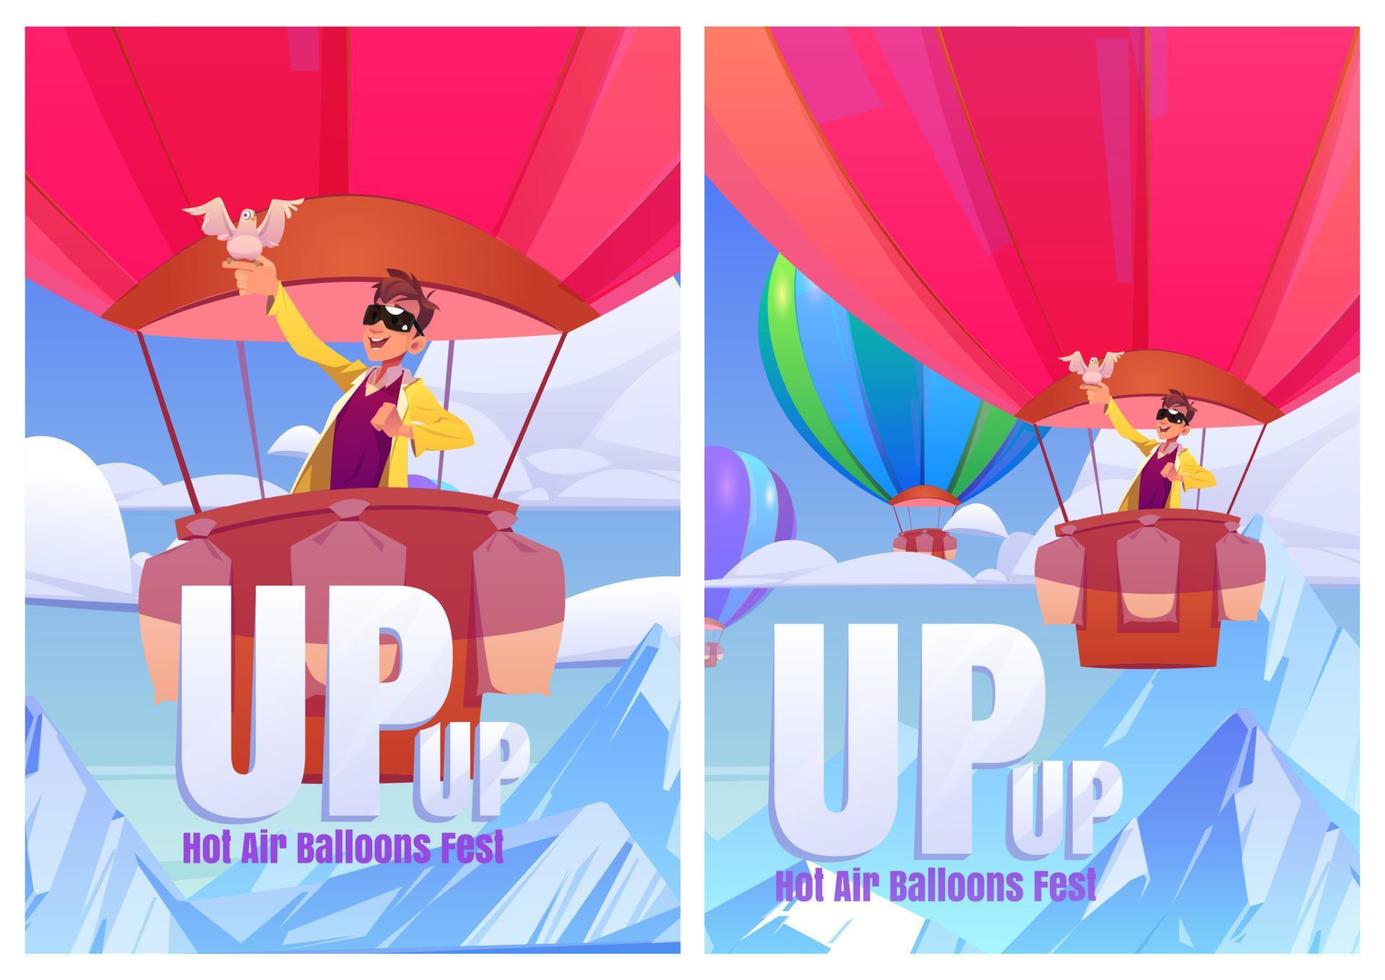 Hot air balloons fest cartoon posters, tourism vector